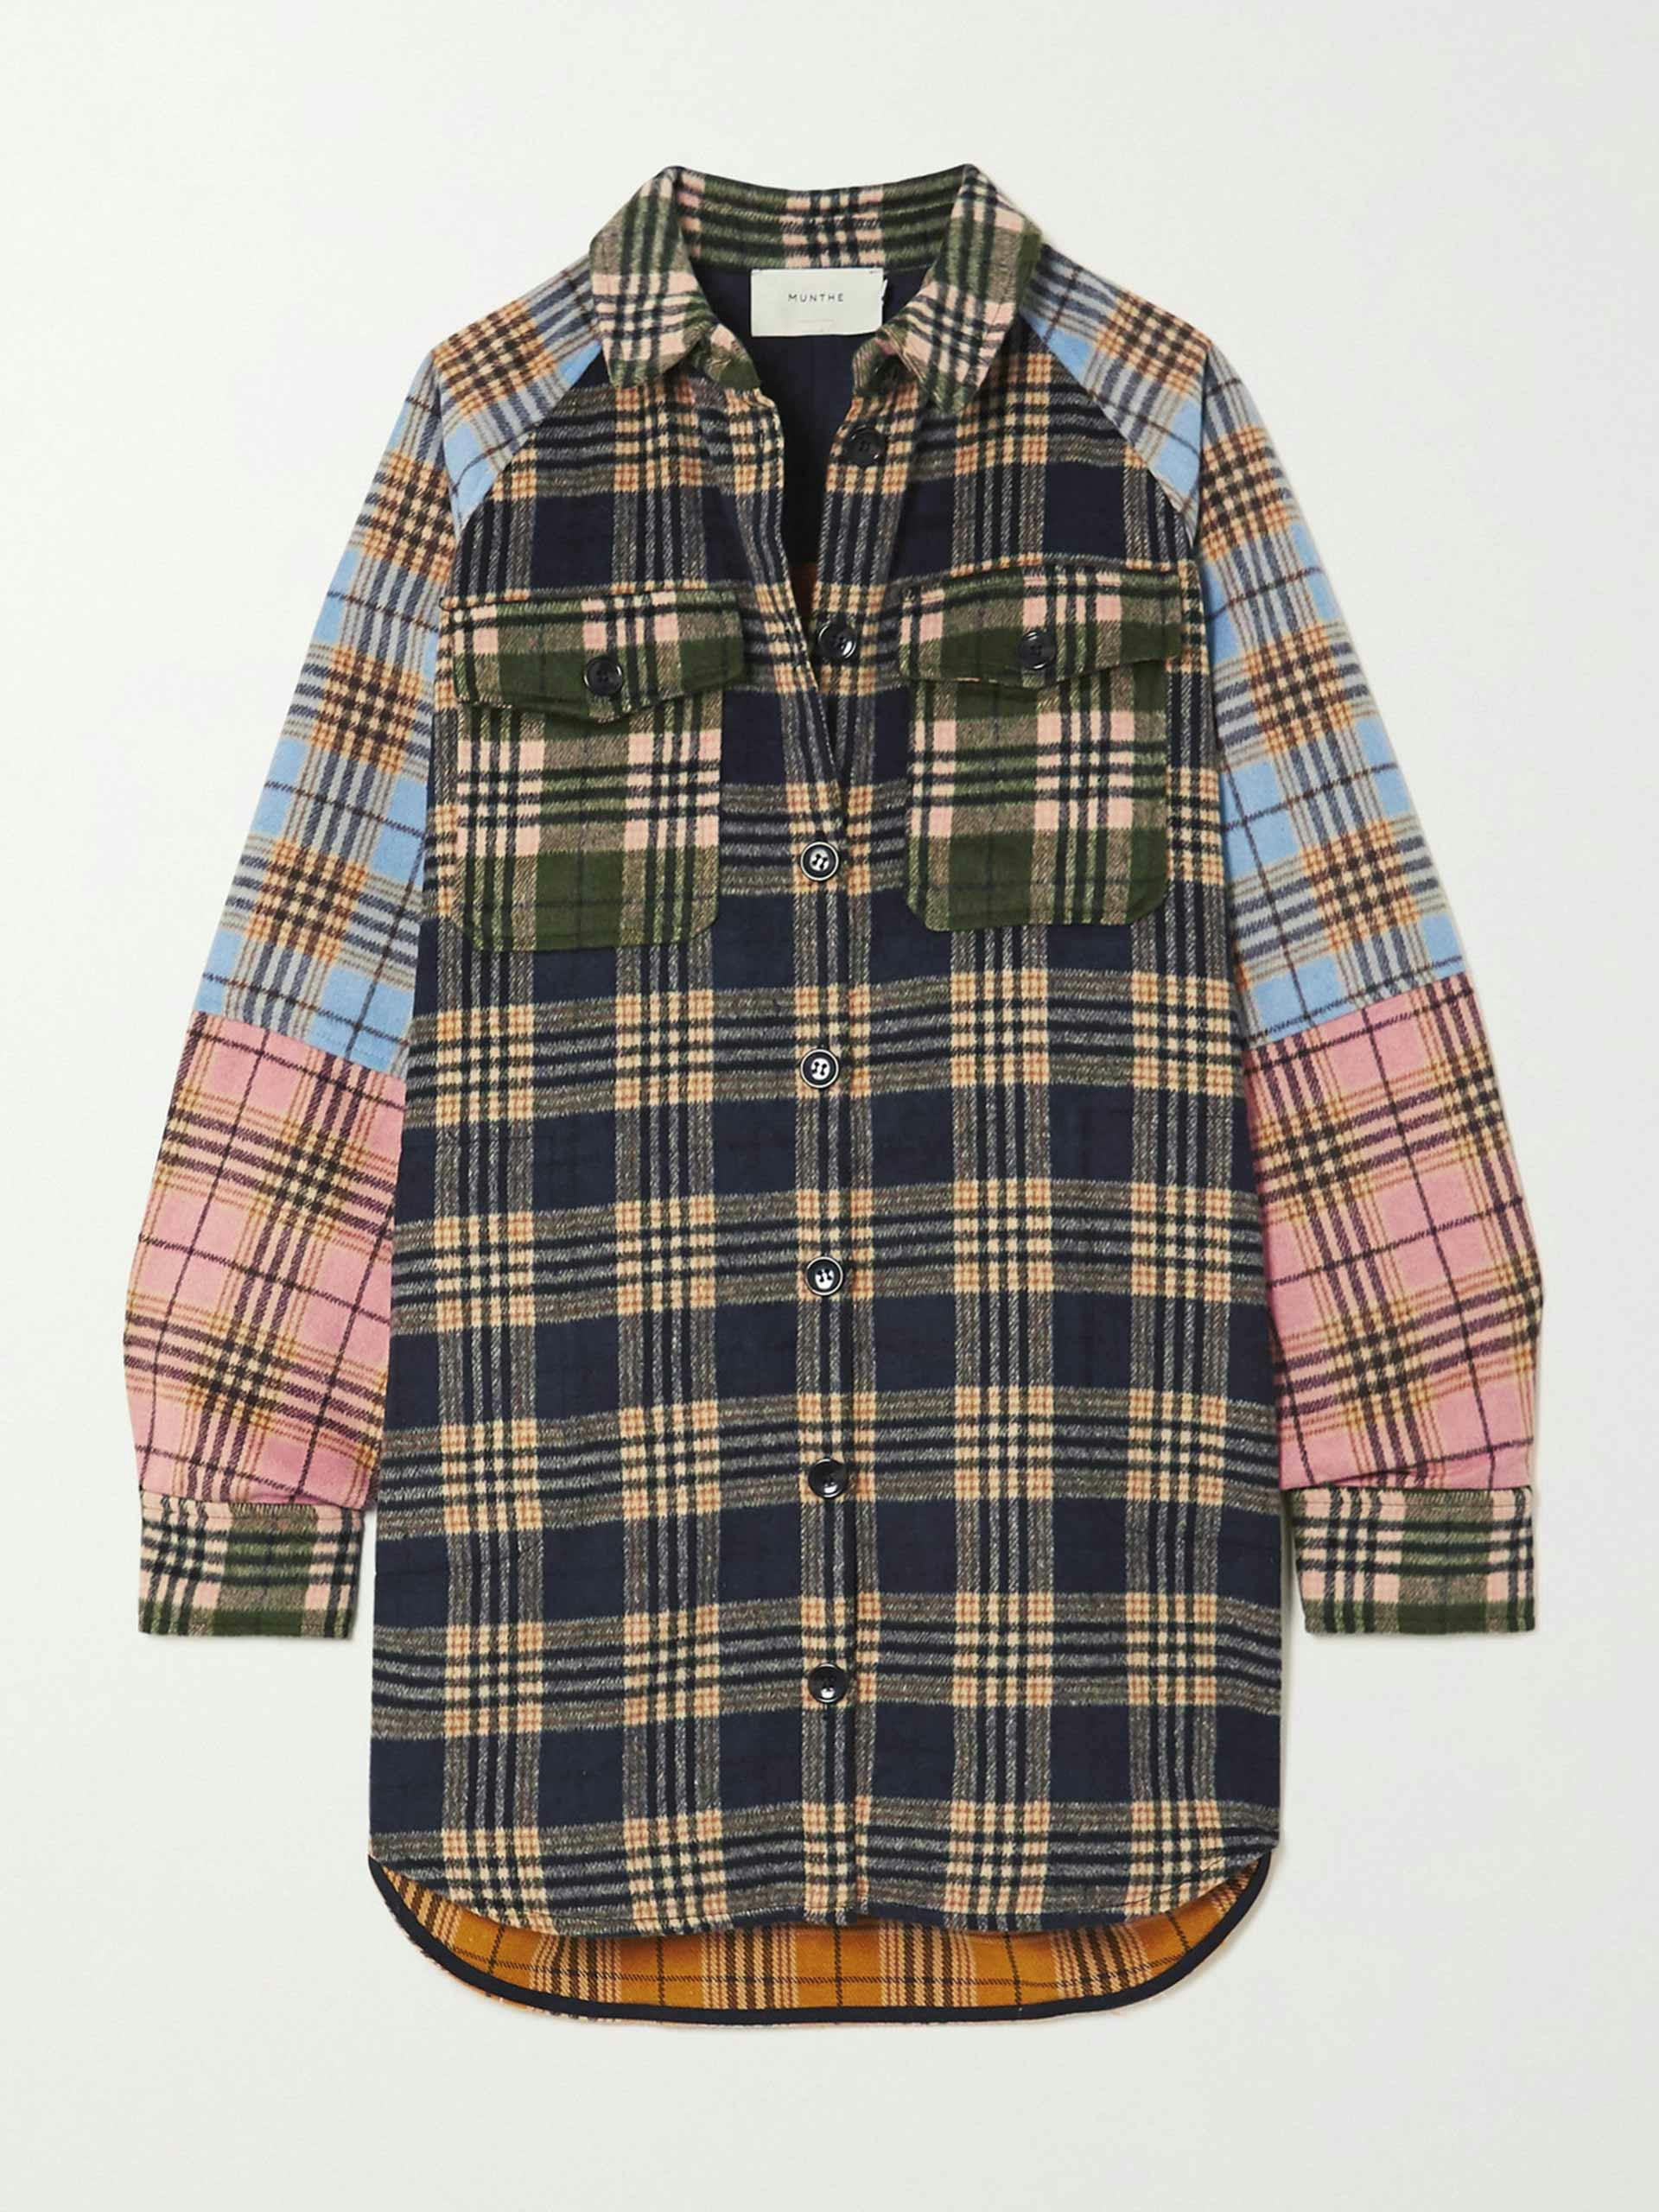 Patchwork flannel shirt